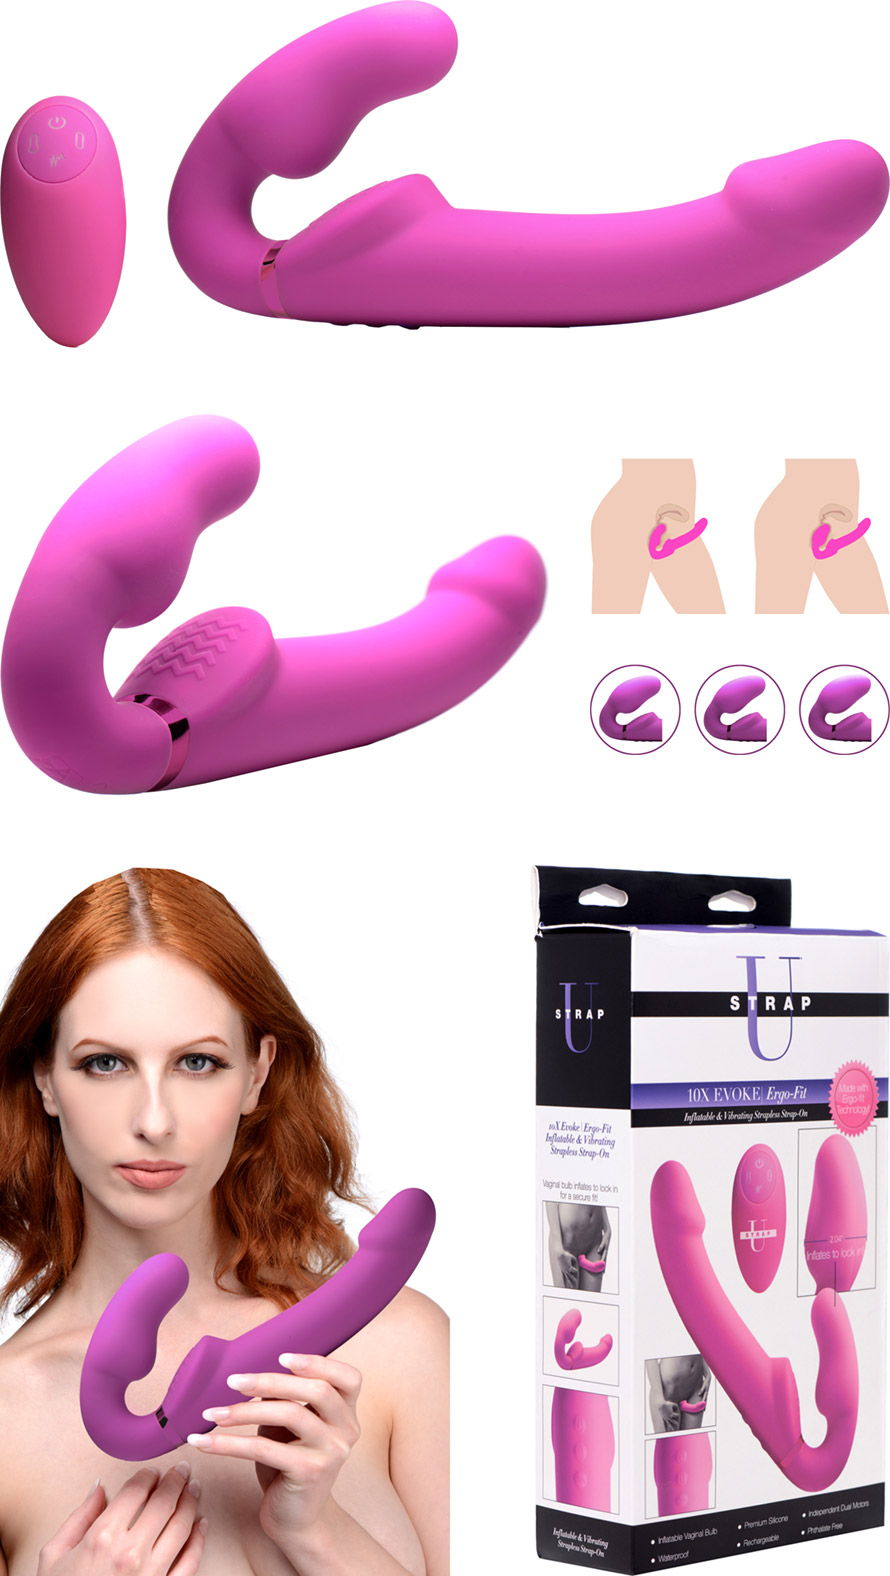 Strap U Evoke vibrating strapless dildo with remote control - Purple